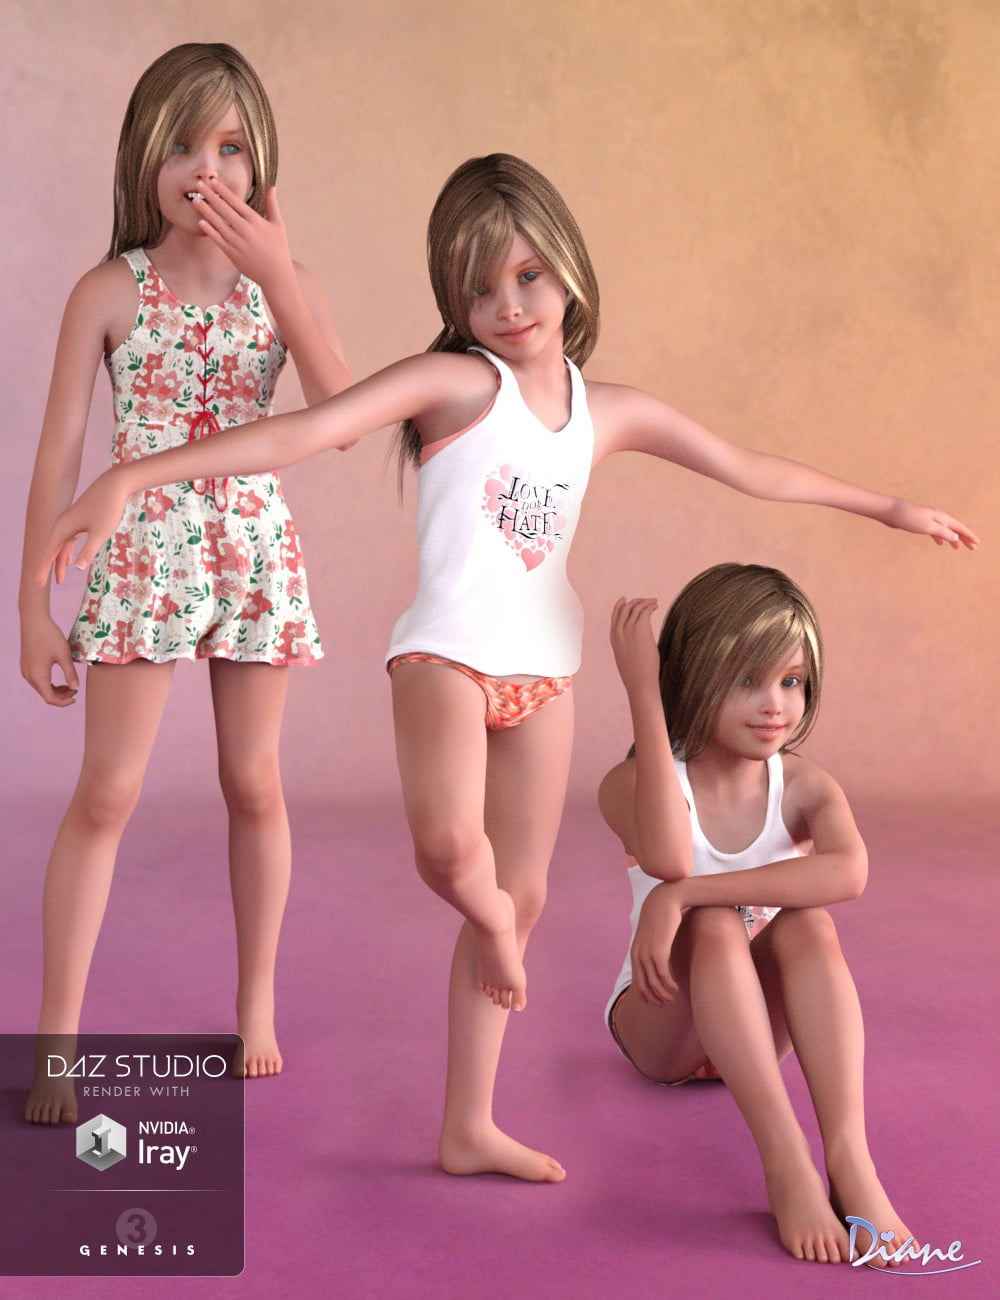 Adorbs Poses For Skyler And Genesis 3 Females 3d Models For Daz